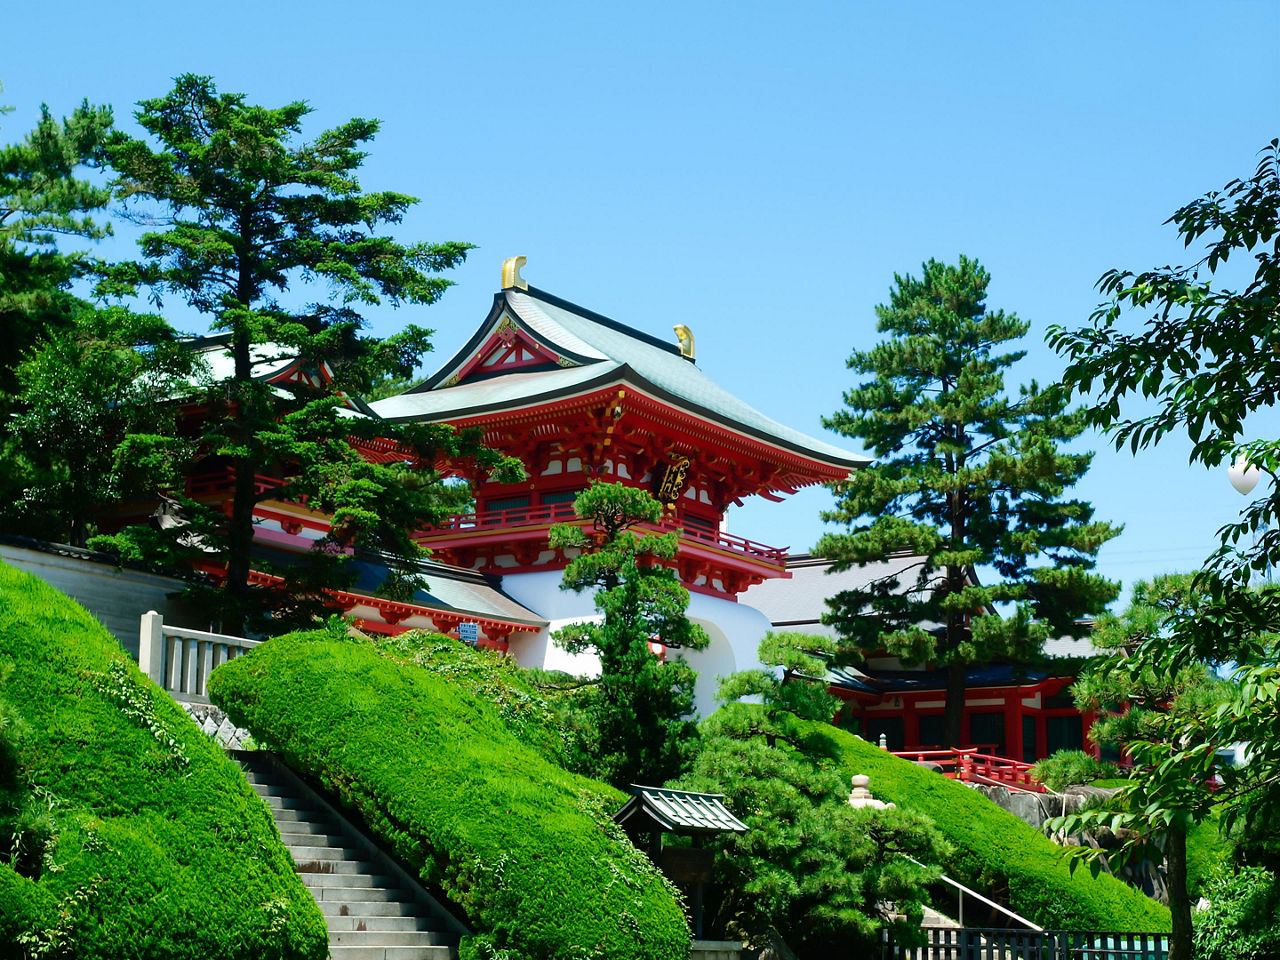 The Akama Shrine in Shimonoseki, Japan